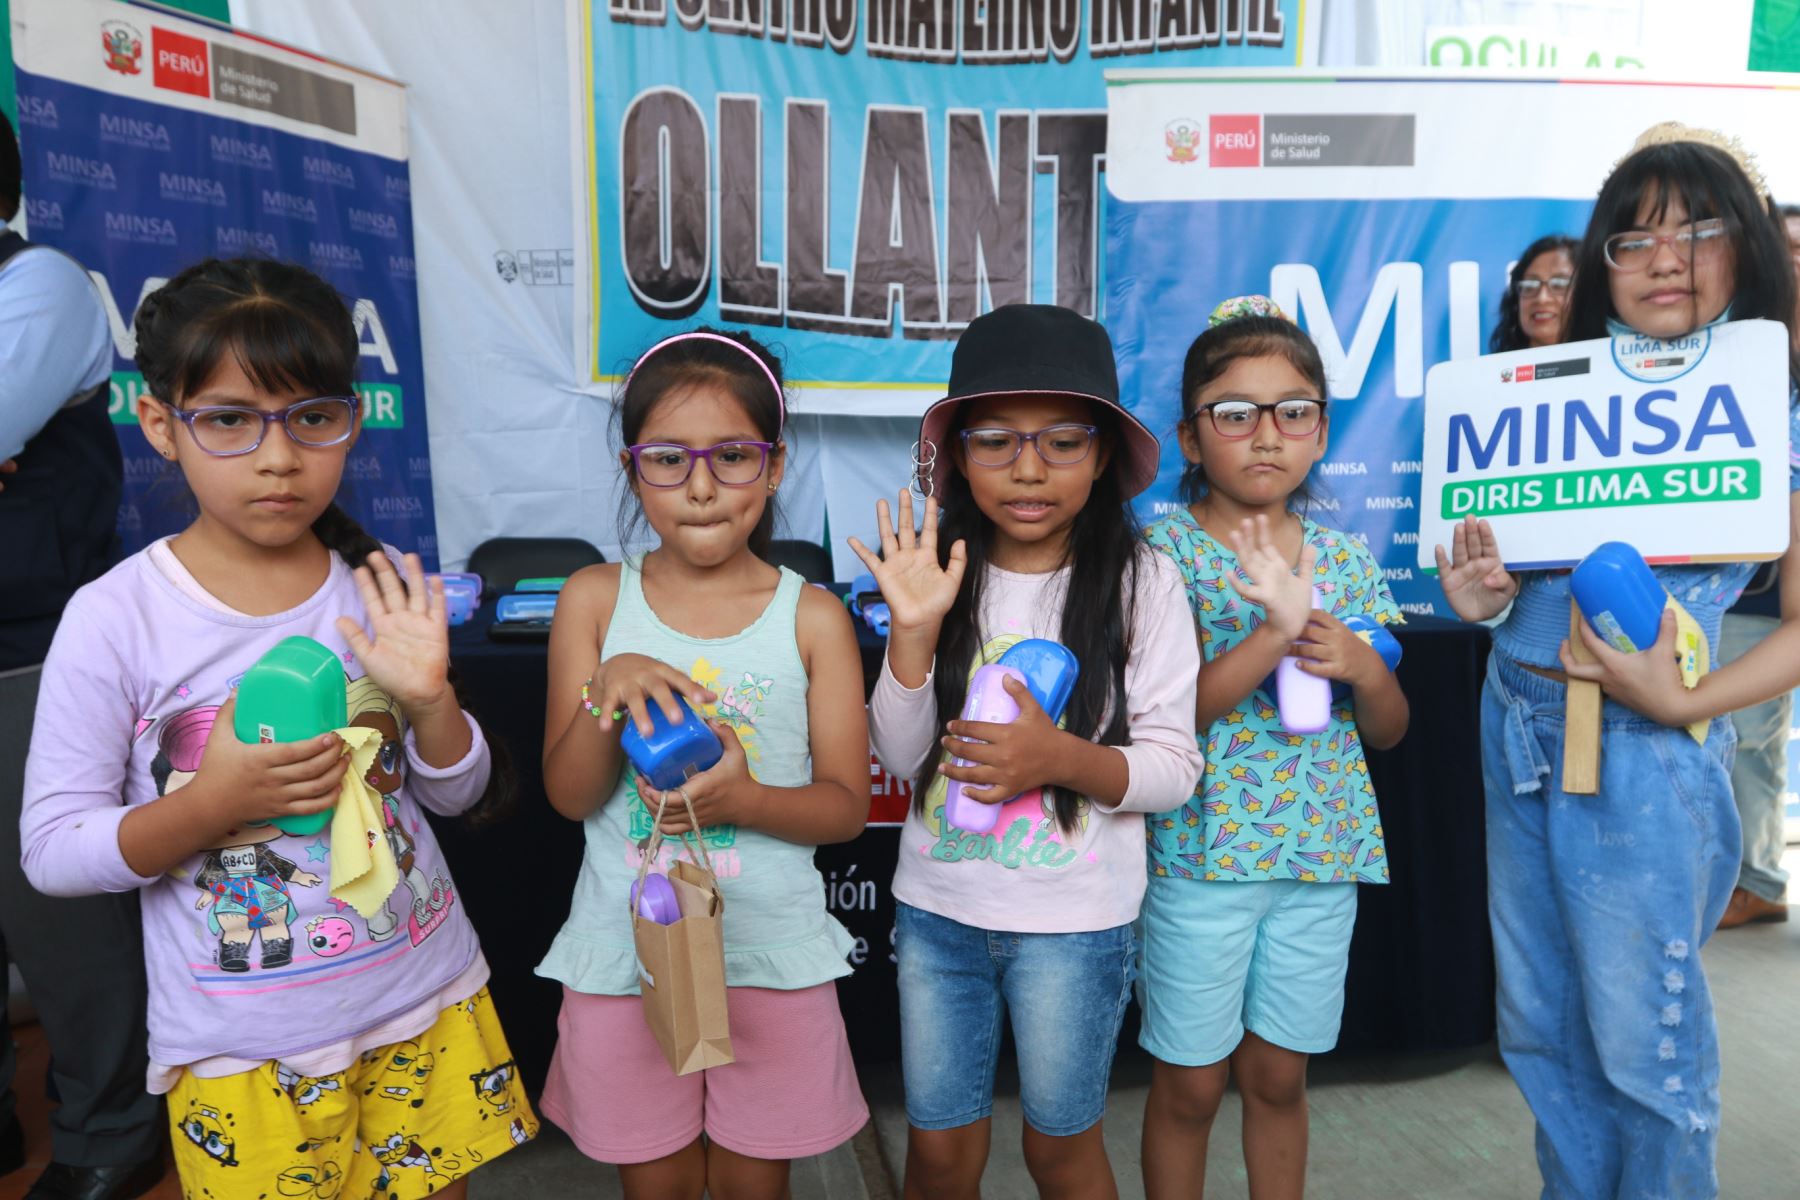 Minsa hace entrega de lentes correctores a niños de San Juan de Miraflores.FOTO:ANDINA/Hector Vinces.